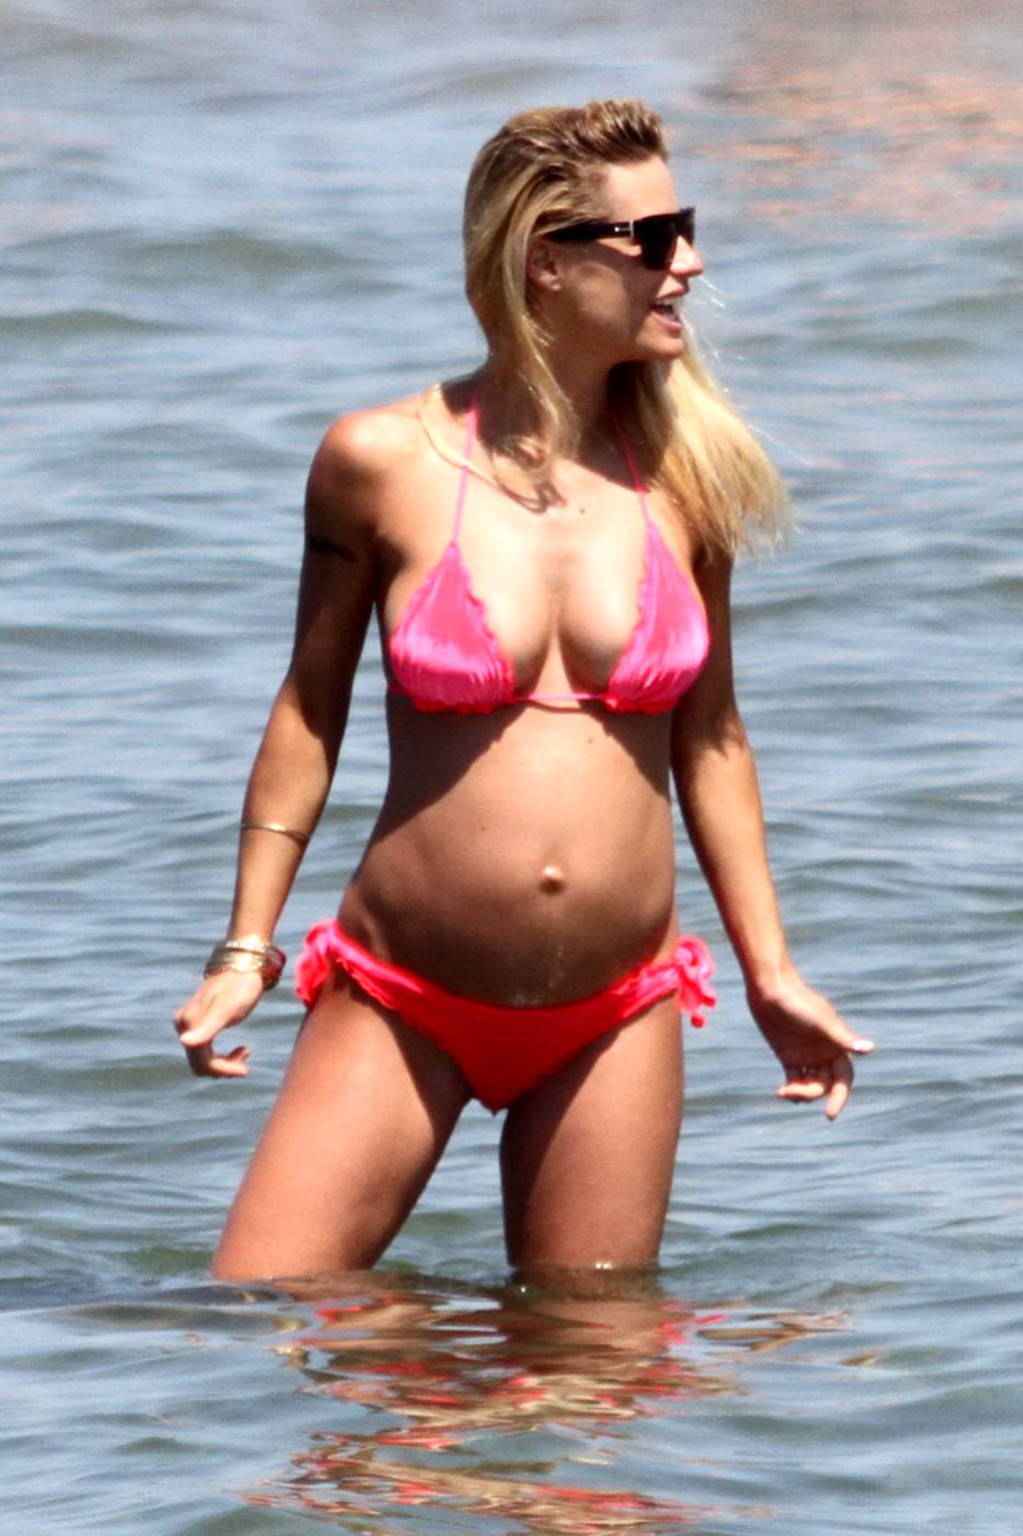 Michelle hunziker embarazada con un bikini en la playa de forte dei marmi, ita
 #75227889